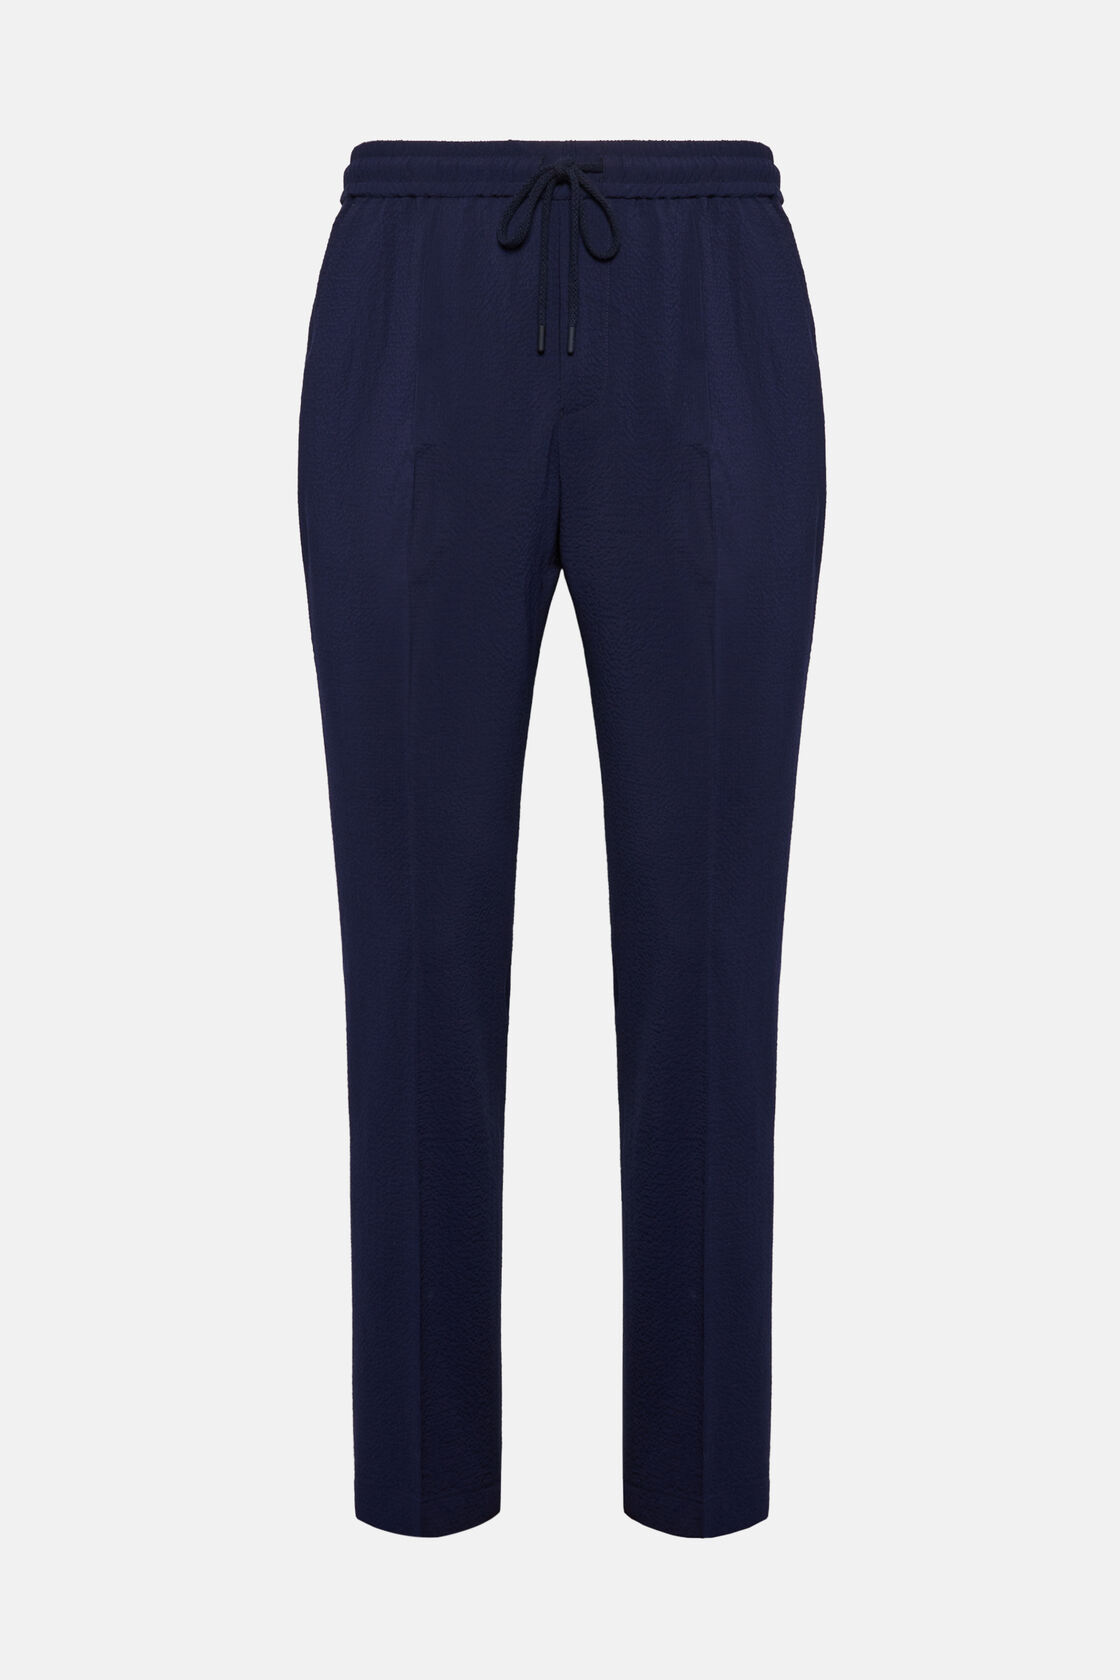 City Trousers In Stretch Wool Seersucker, Navy blue, hi-res